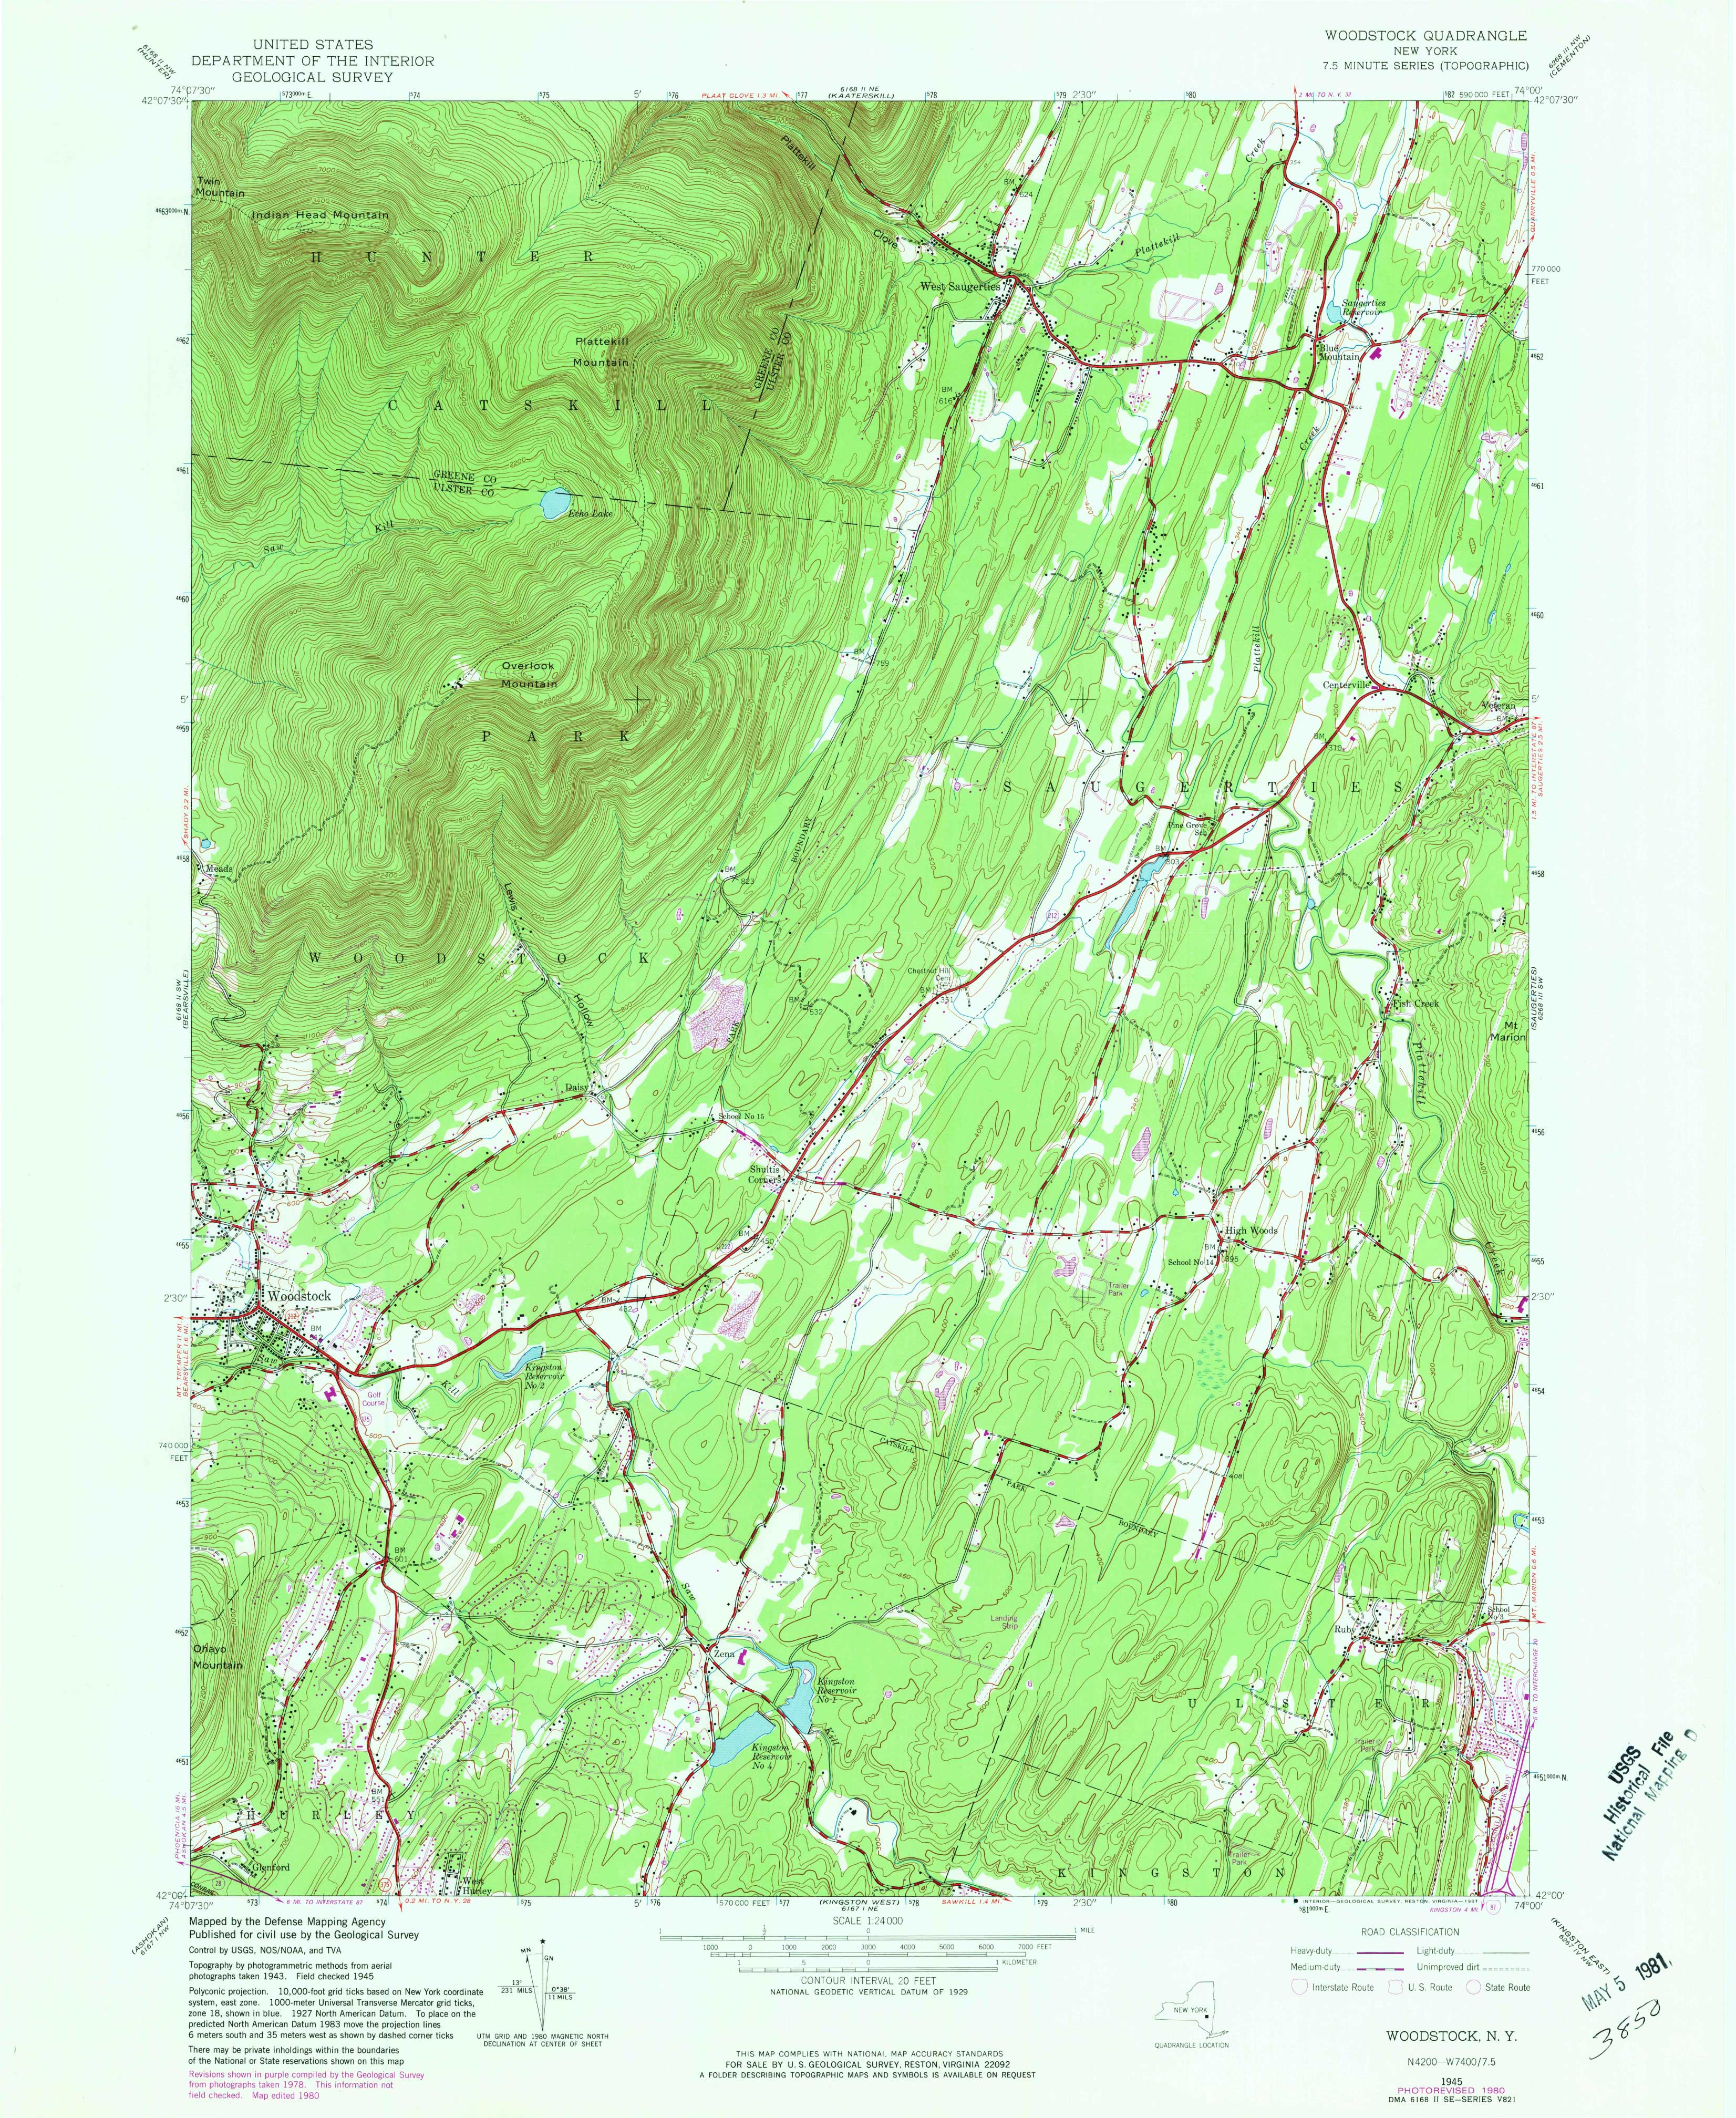 1945 USGS topographical map of Plattekill